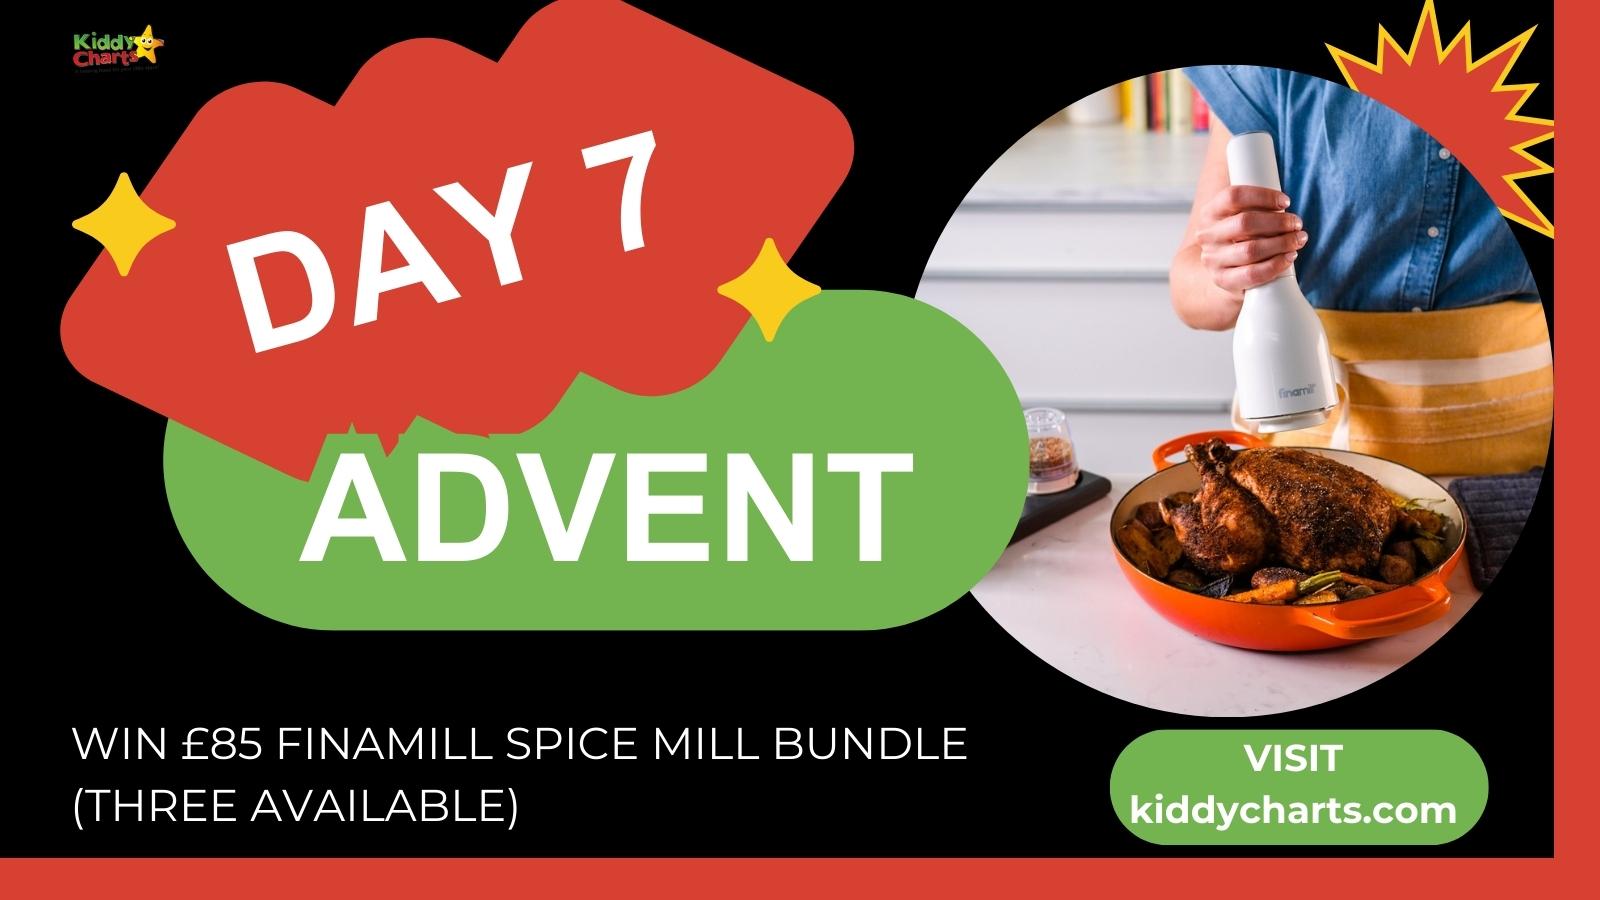 Win a £85 FinaMill spice mill bundle (Three Available) #KiddyChartsAdvent